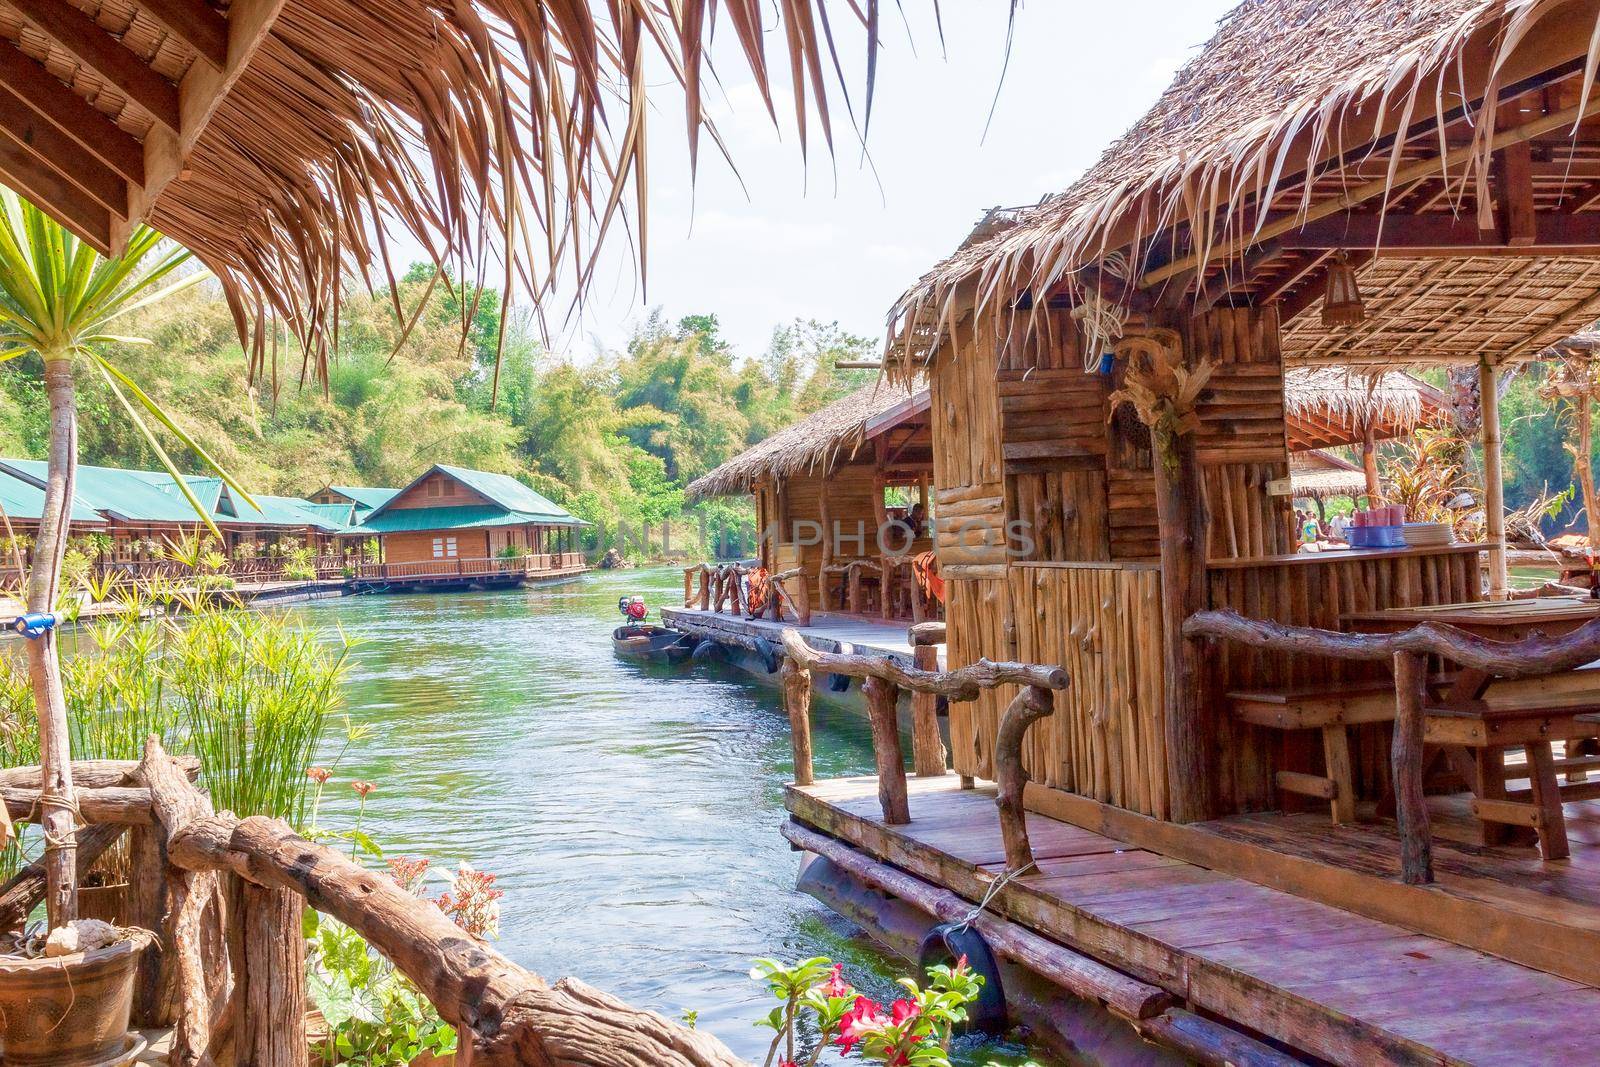 Floating tourist huts on the river Kwai, Thailand. by kolesnikov_studio